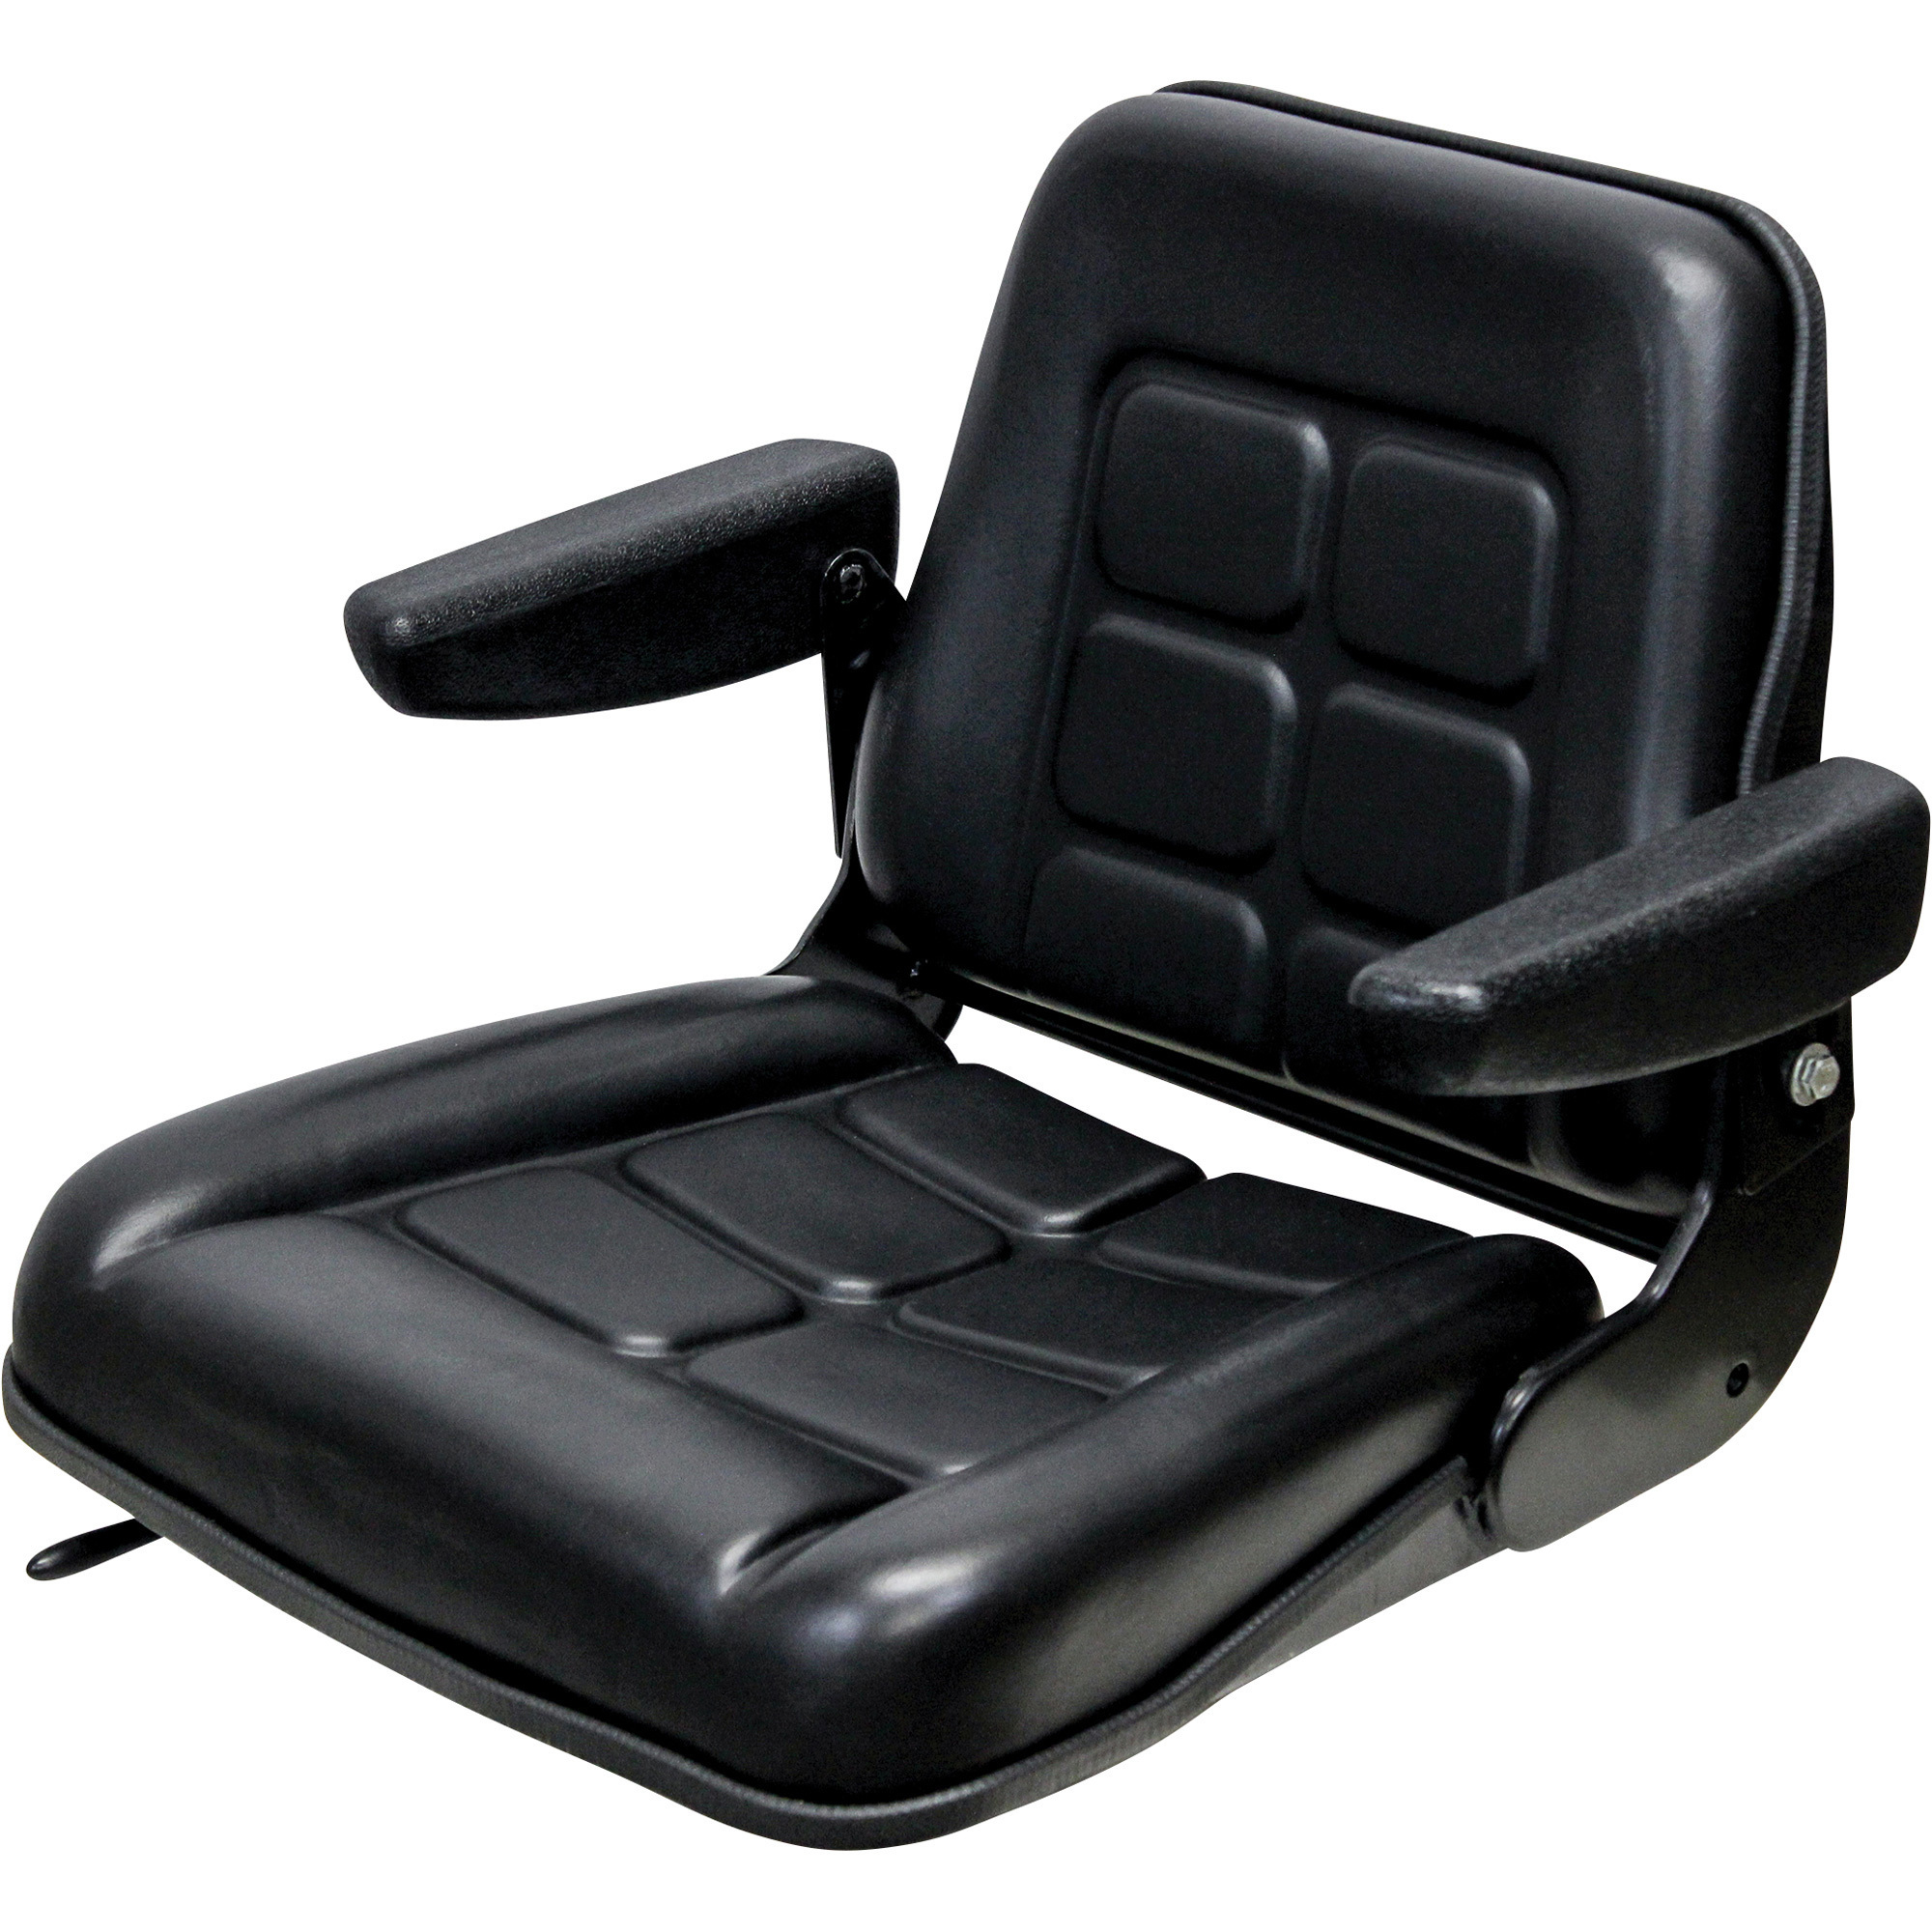 K&M Uni Pro KM 142 Forklift Seat, Black Vinyl, Model 8546